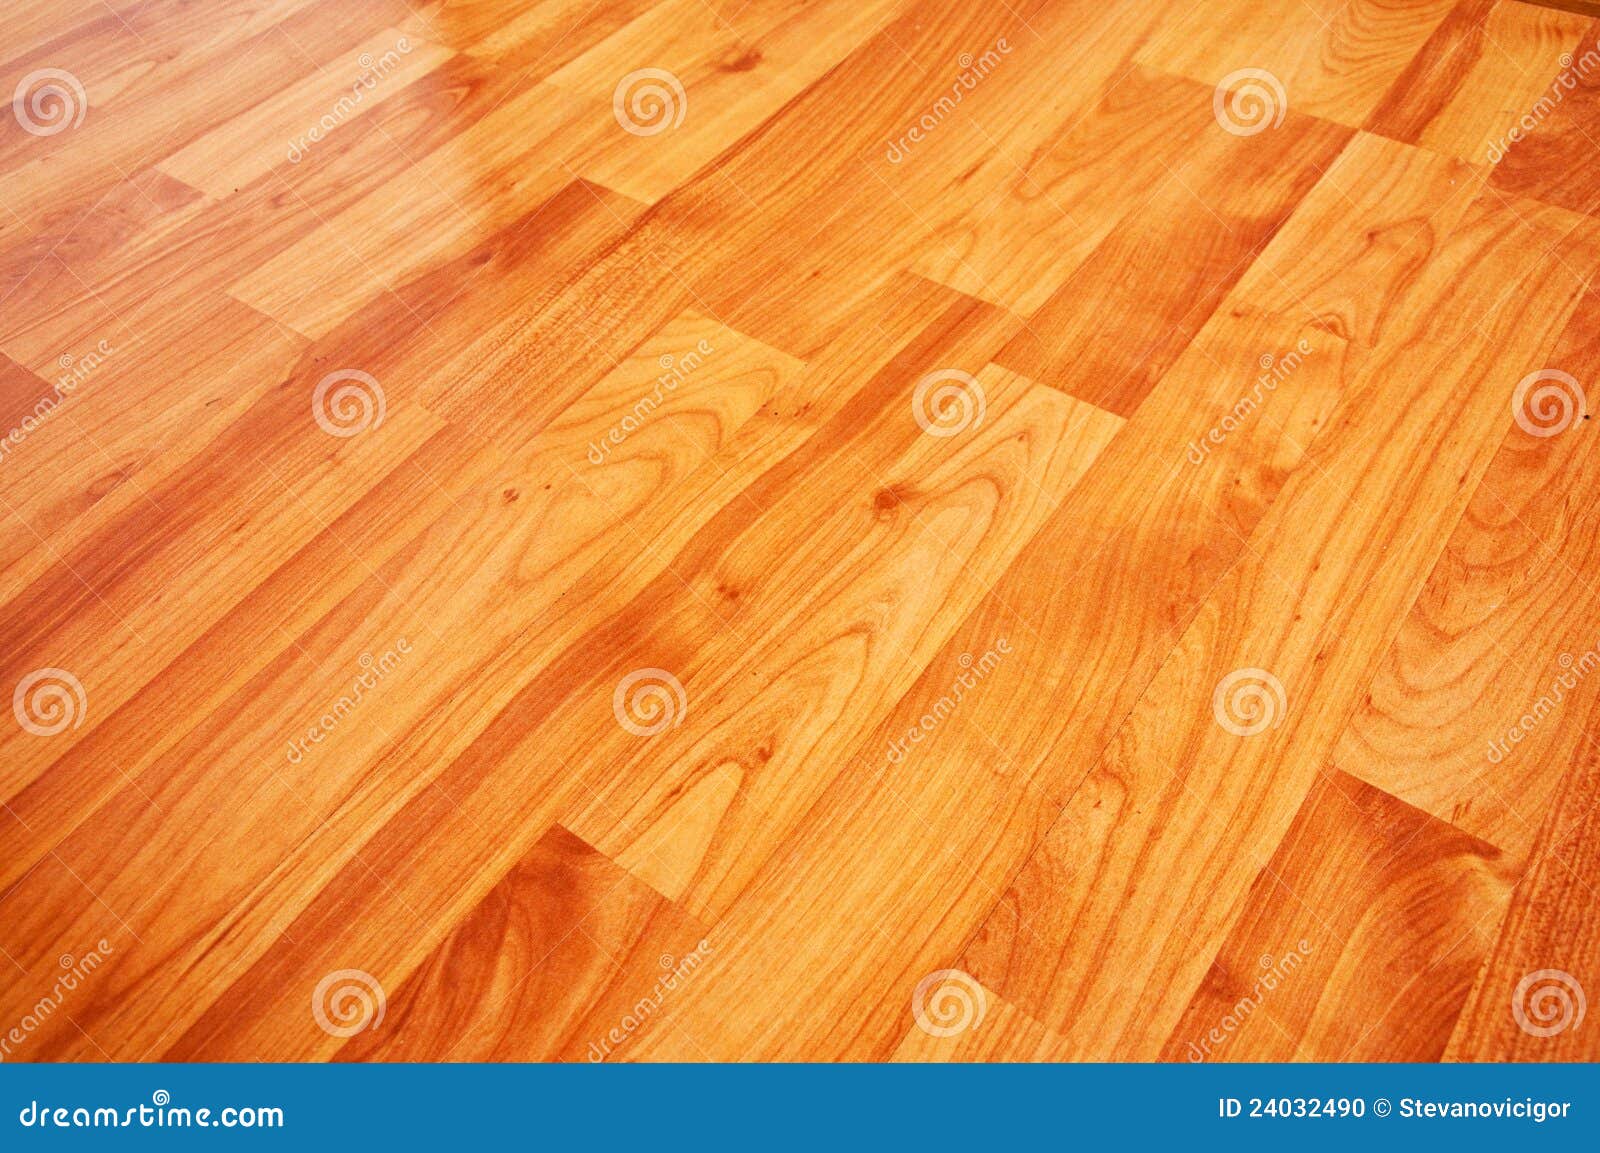 wooden laminated floor